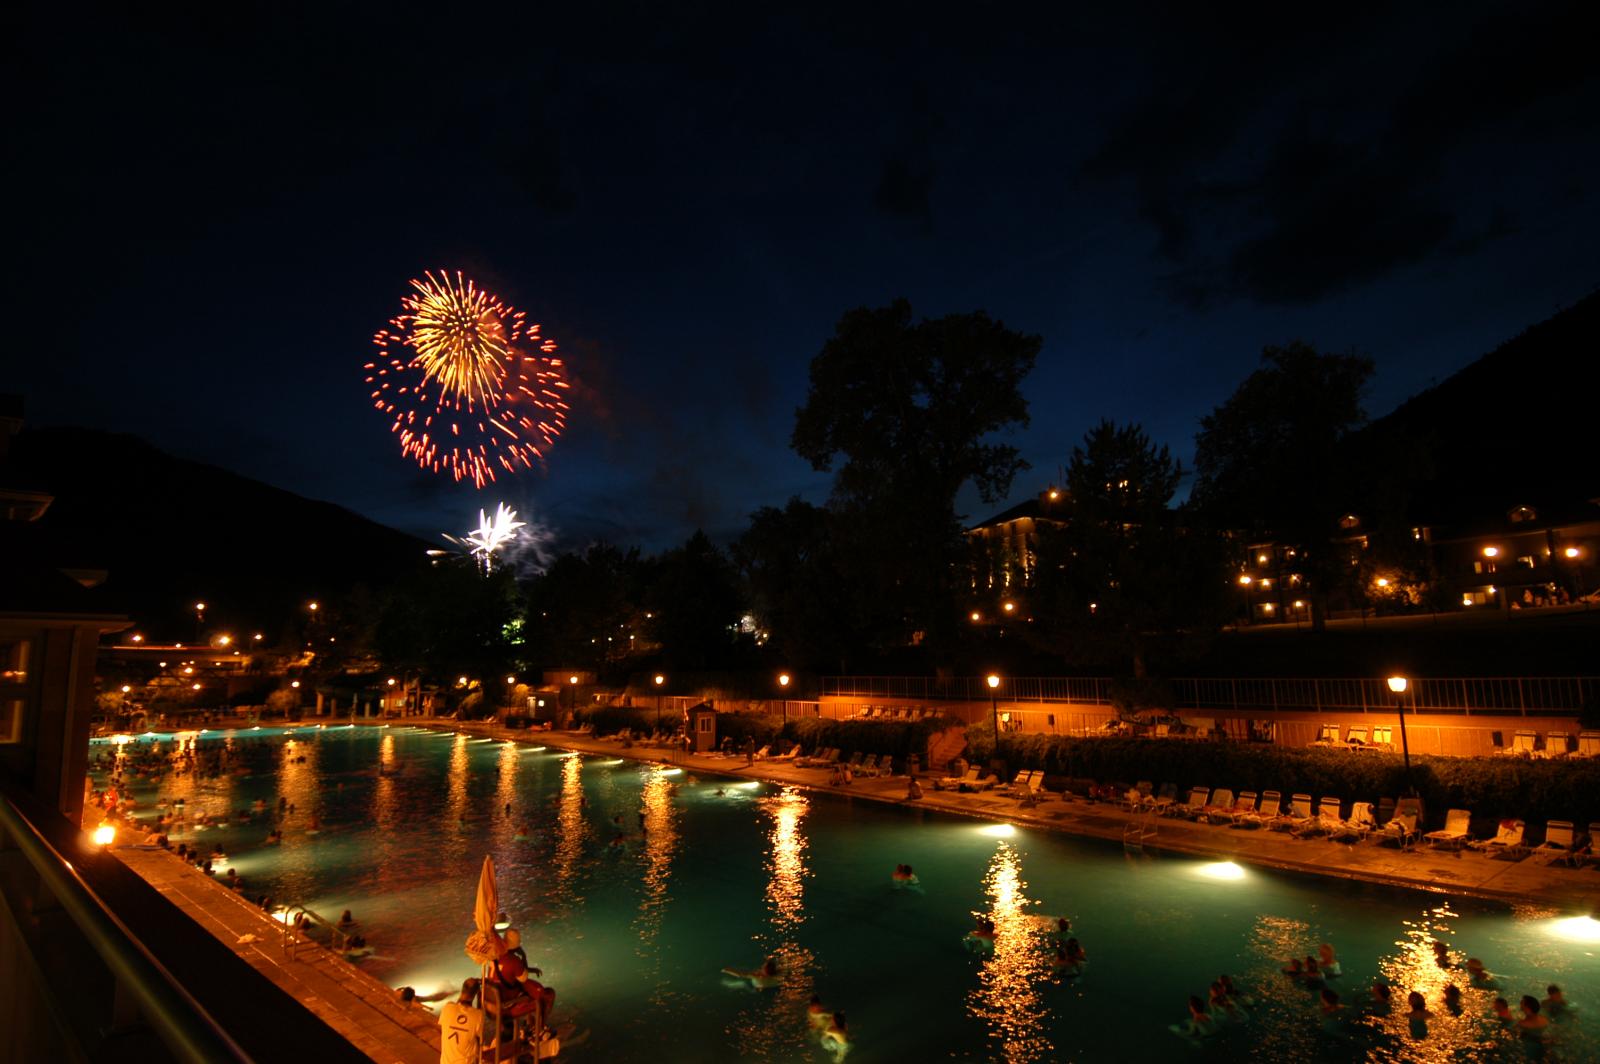 Fireworks over Glenwood Hot Springs